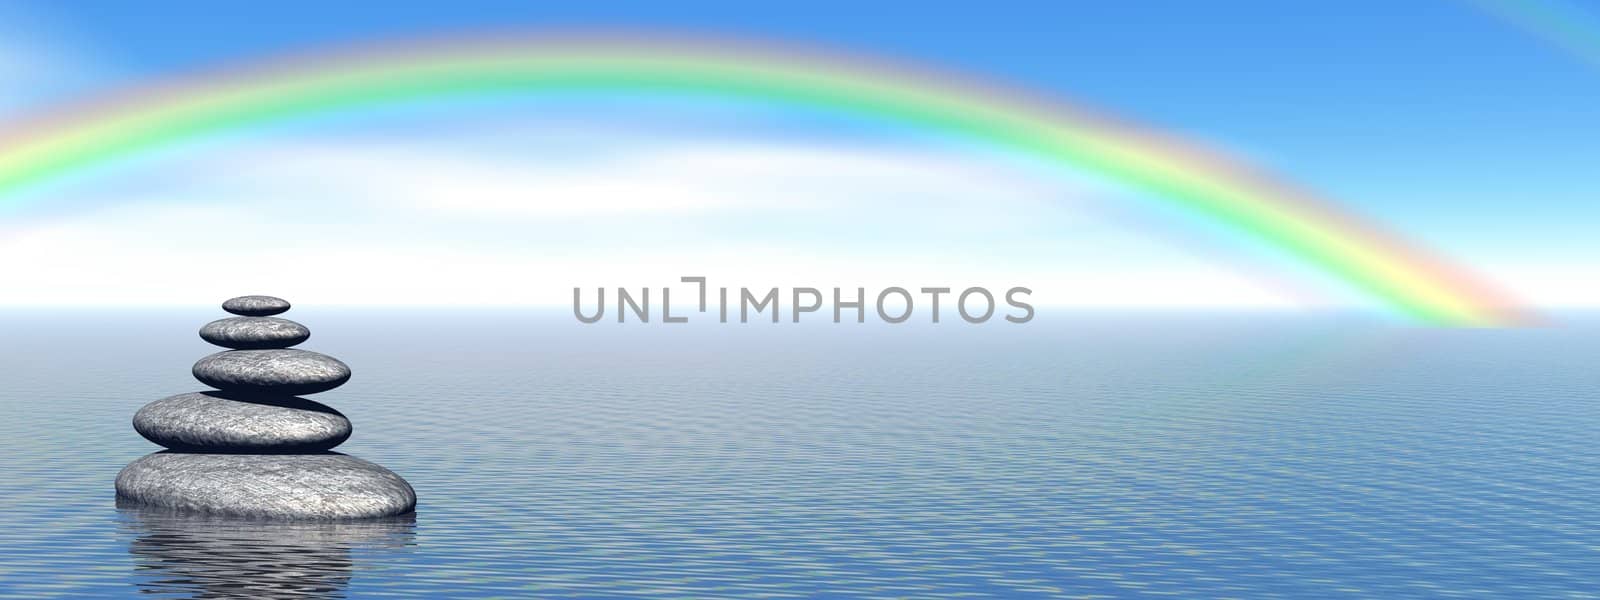 Balanced grey stones in the deep blue ocean with a beautiful rainbow